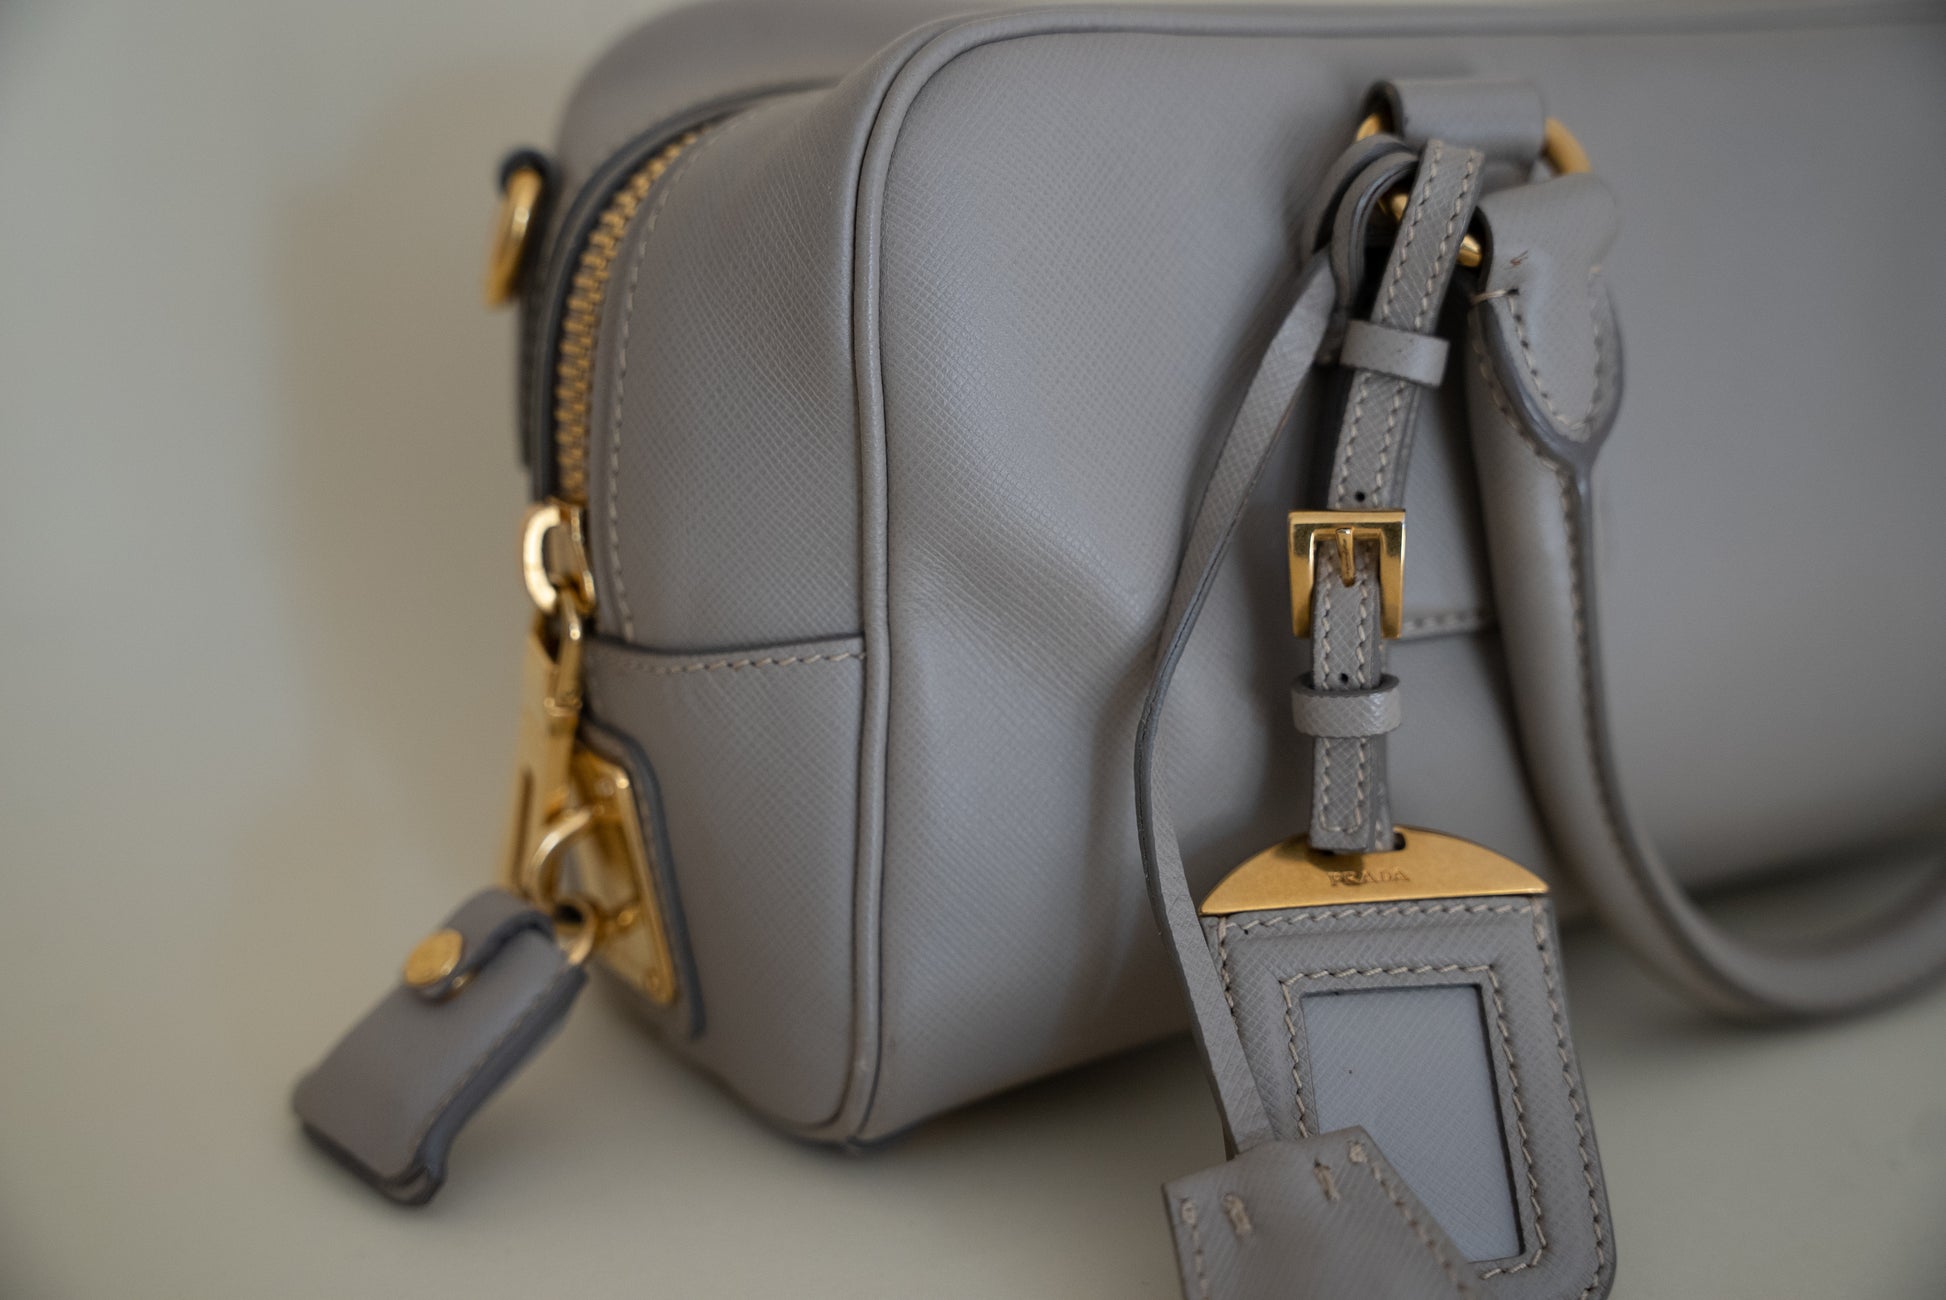 PRADA Baulleto Bag In Black Patent Saffiano Leather